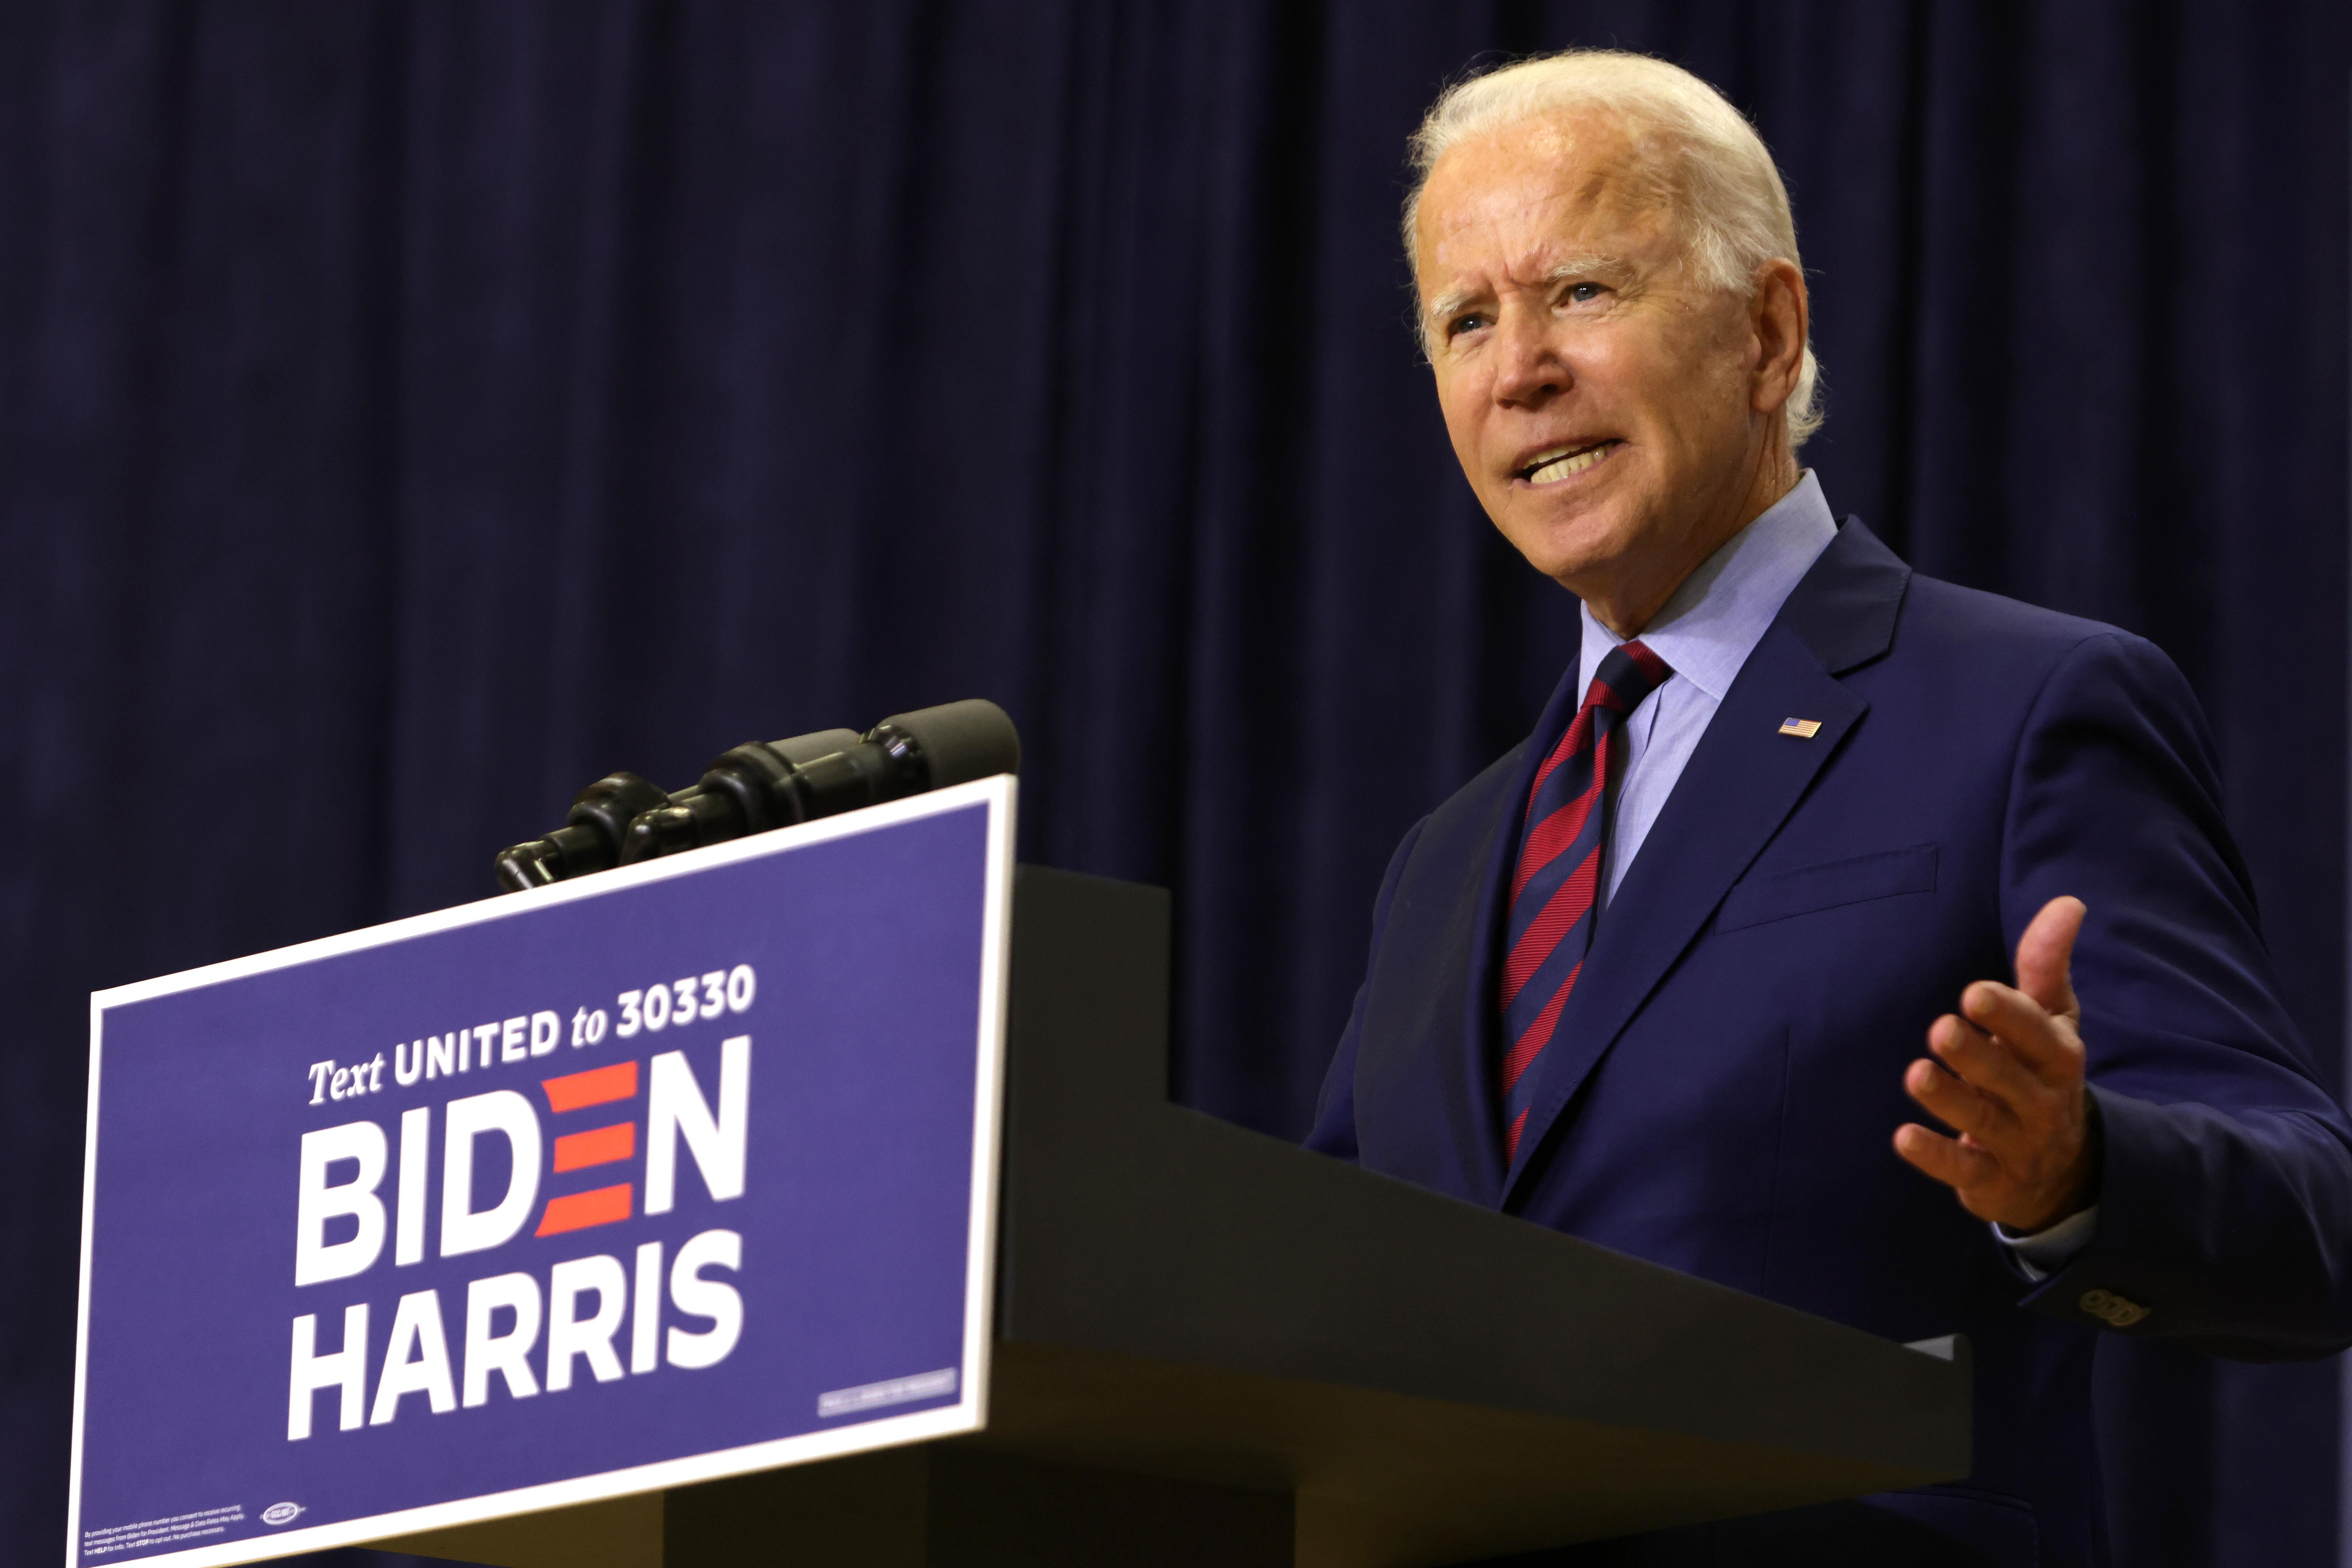 Biden speaks at a lectern carrying the Biden-Harris campaign logo.